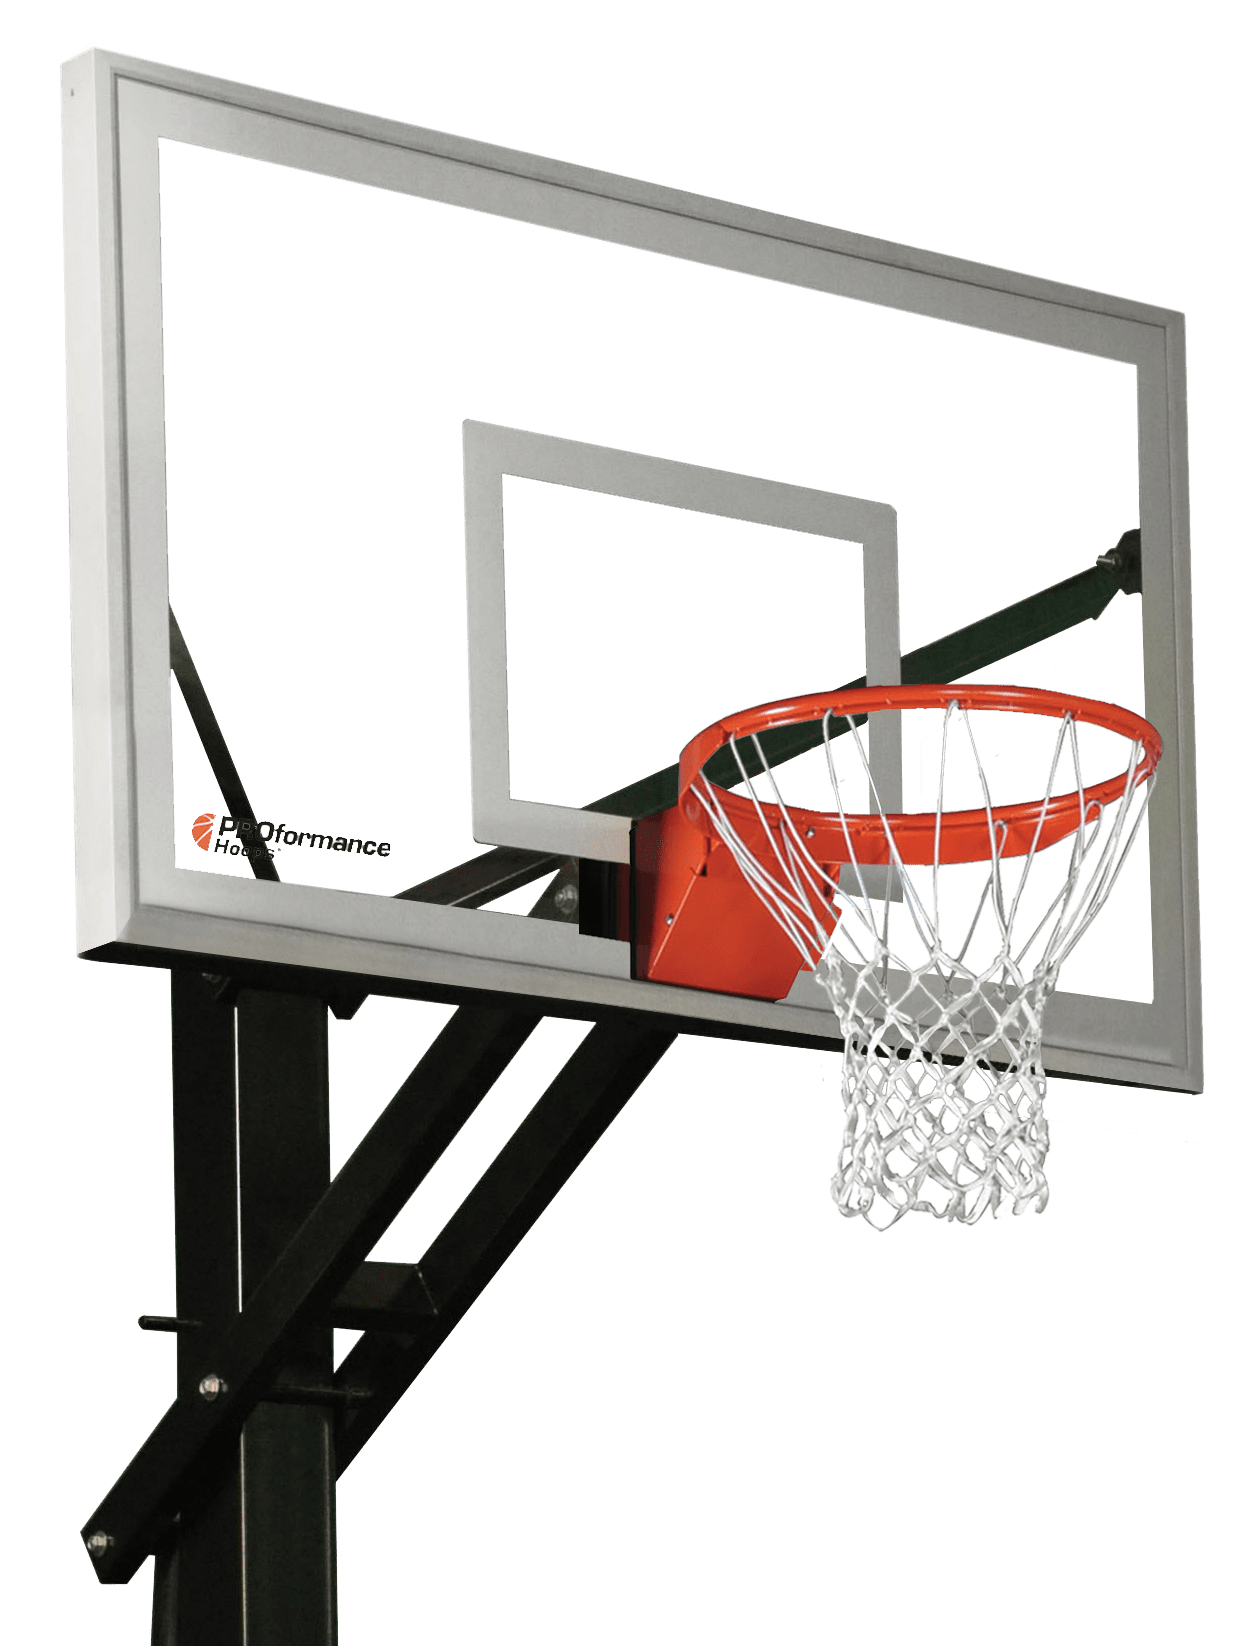 diy basketball backboard dimensions